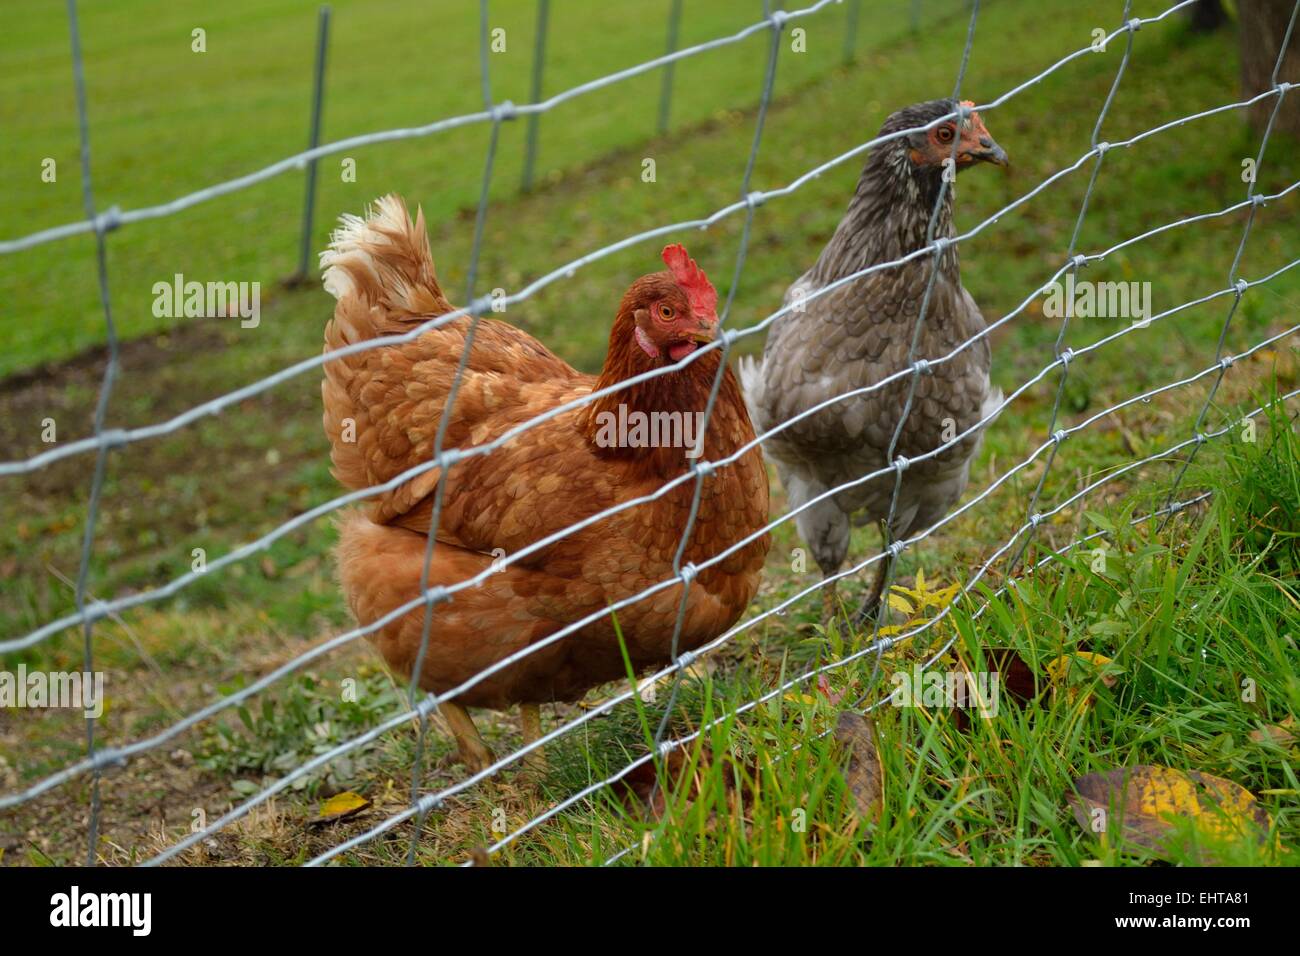 Chicken - Free Range Stock Photo